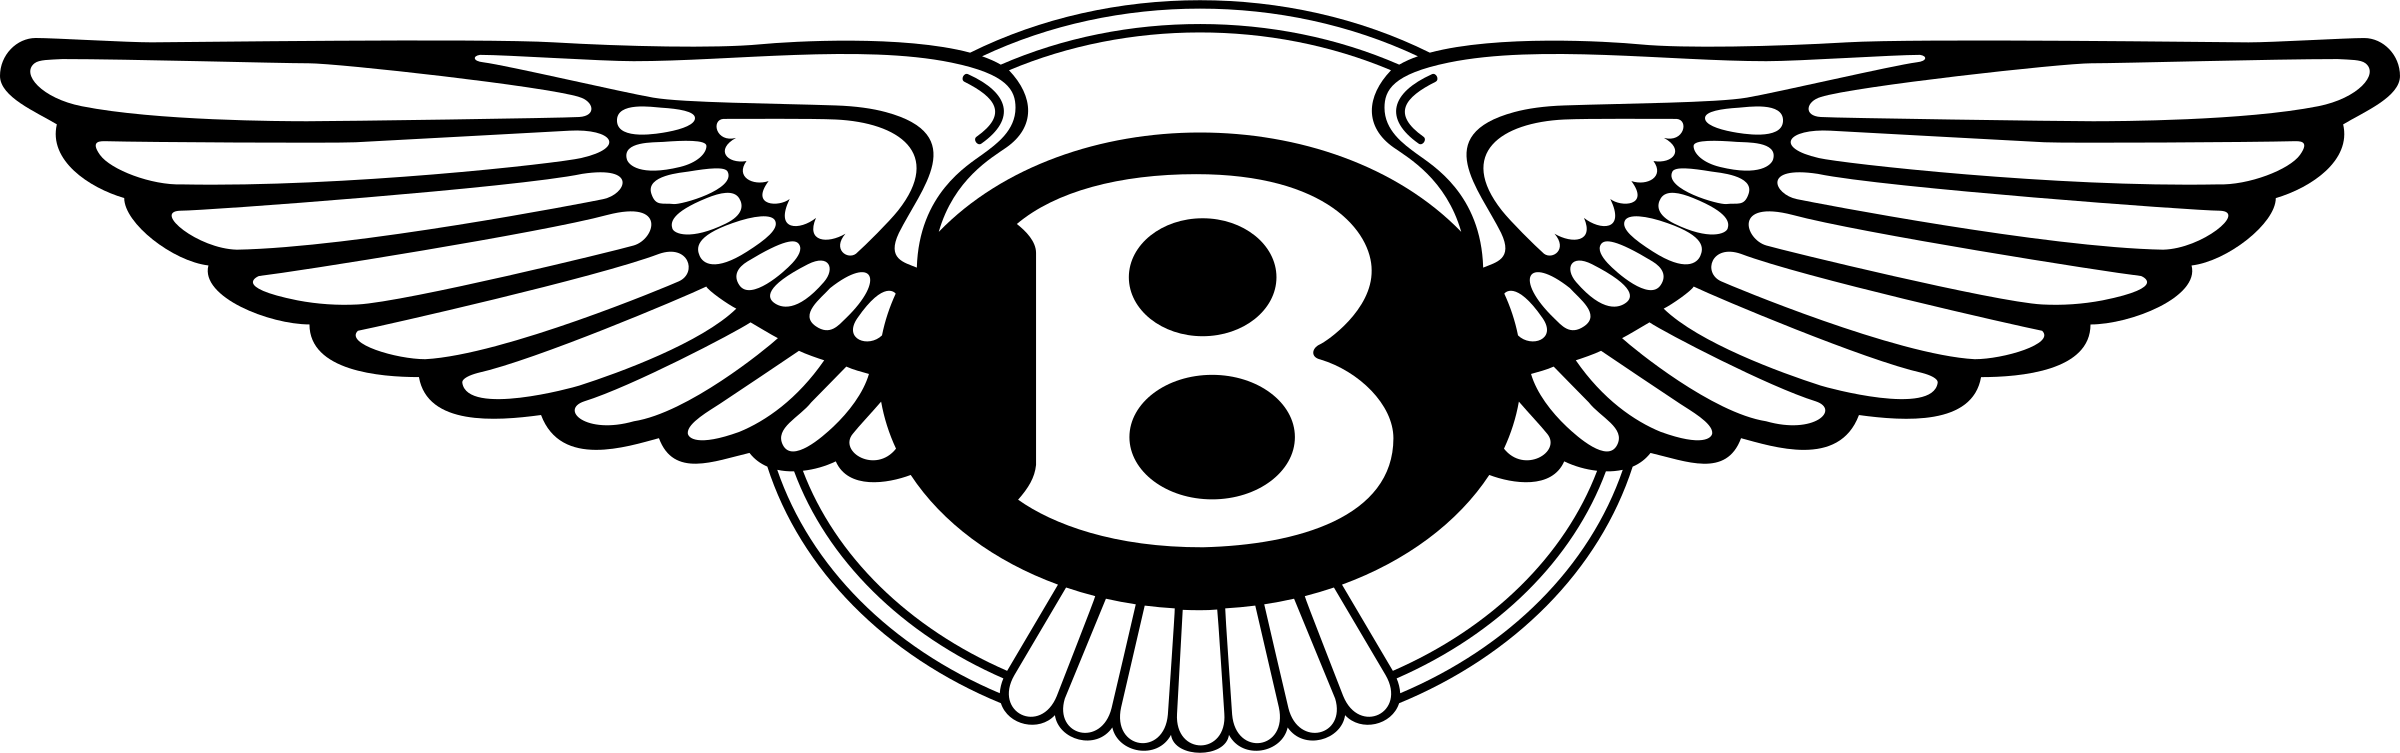 Bentley Logo - Bentley Logo PNG Transparent & SVG Vector - Freebie Supply